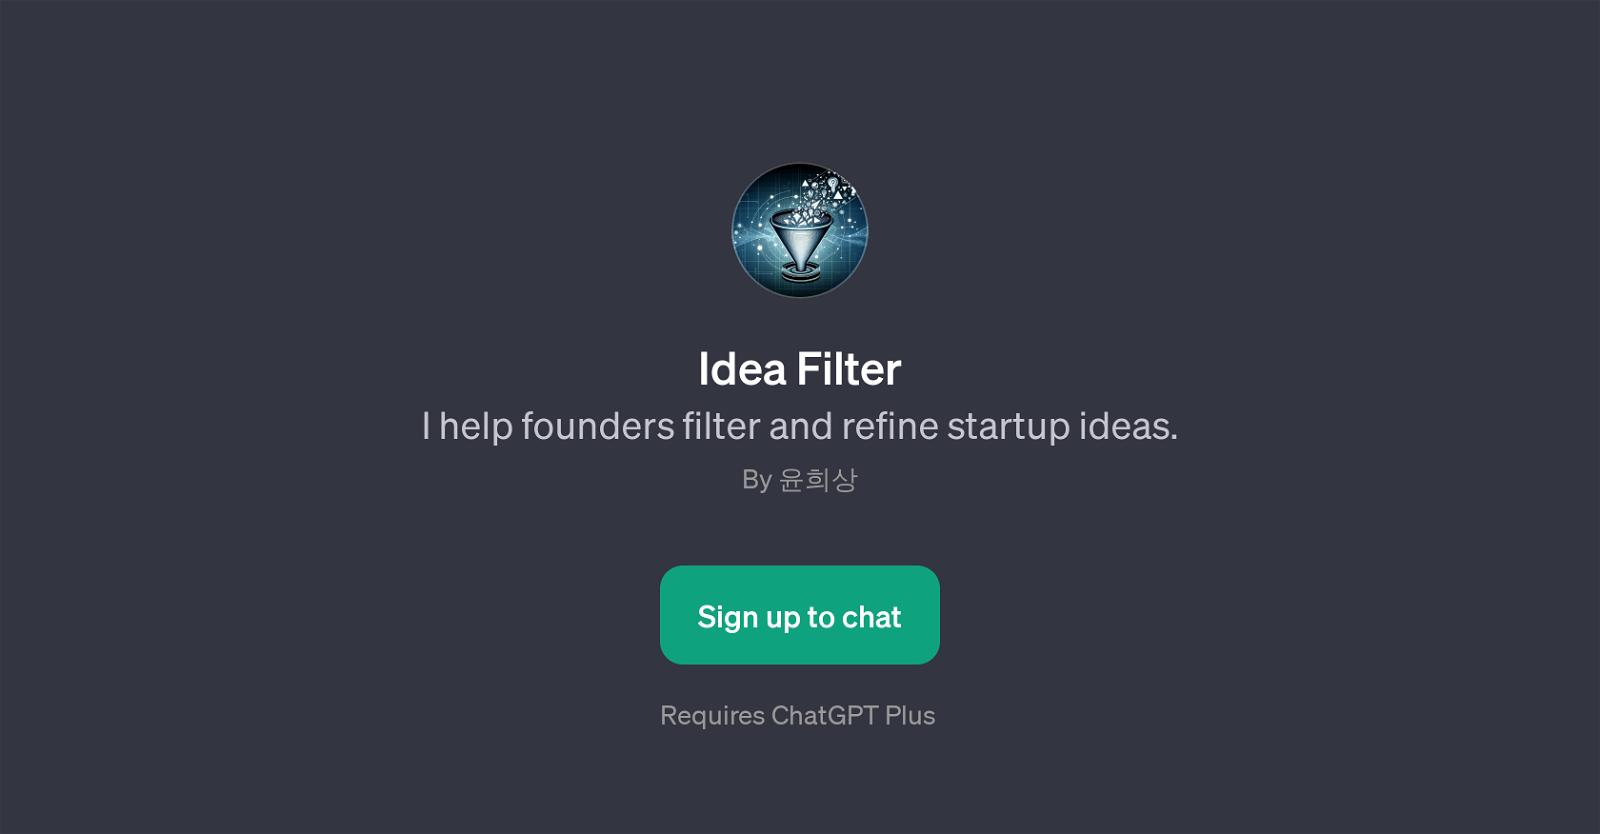 Idea Filter website